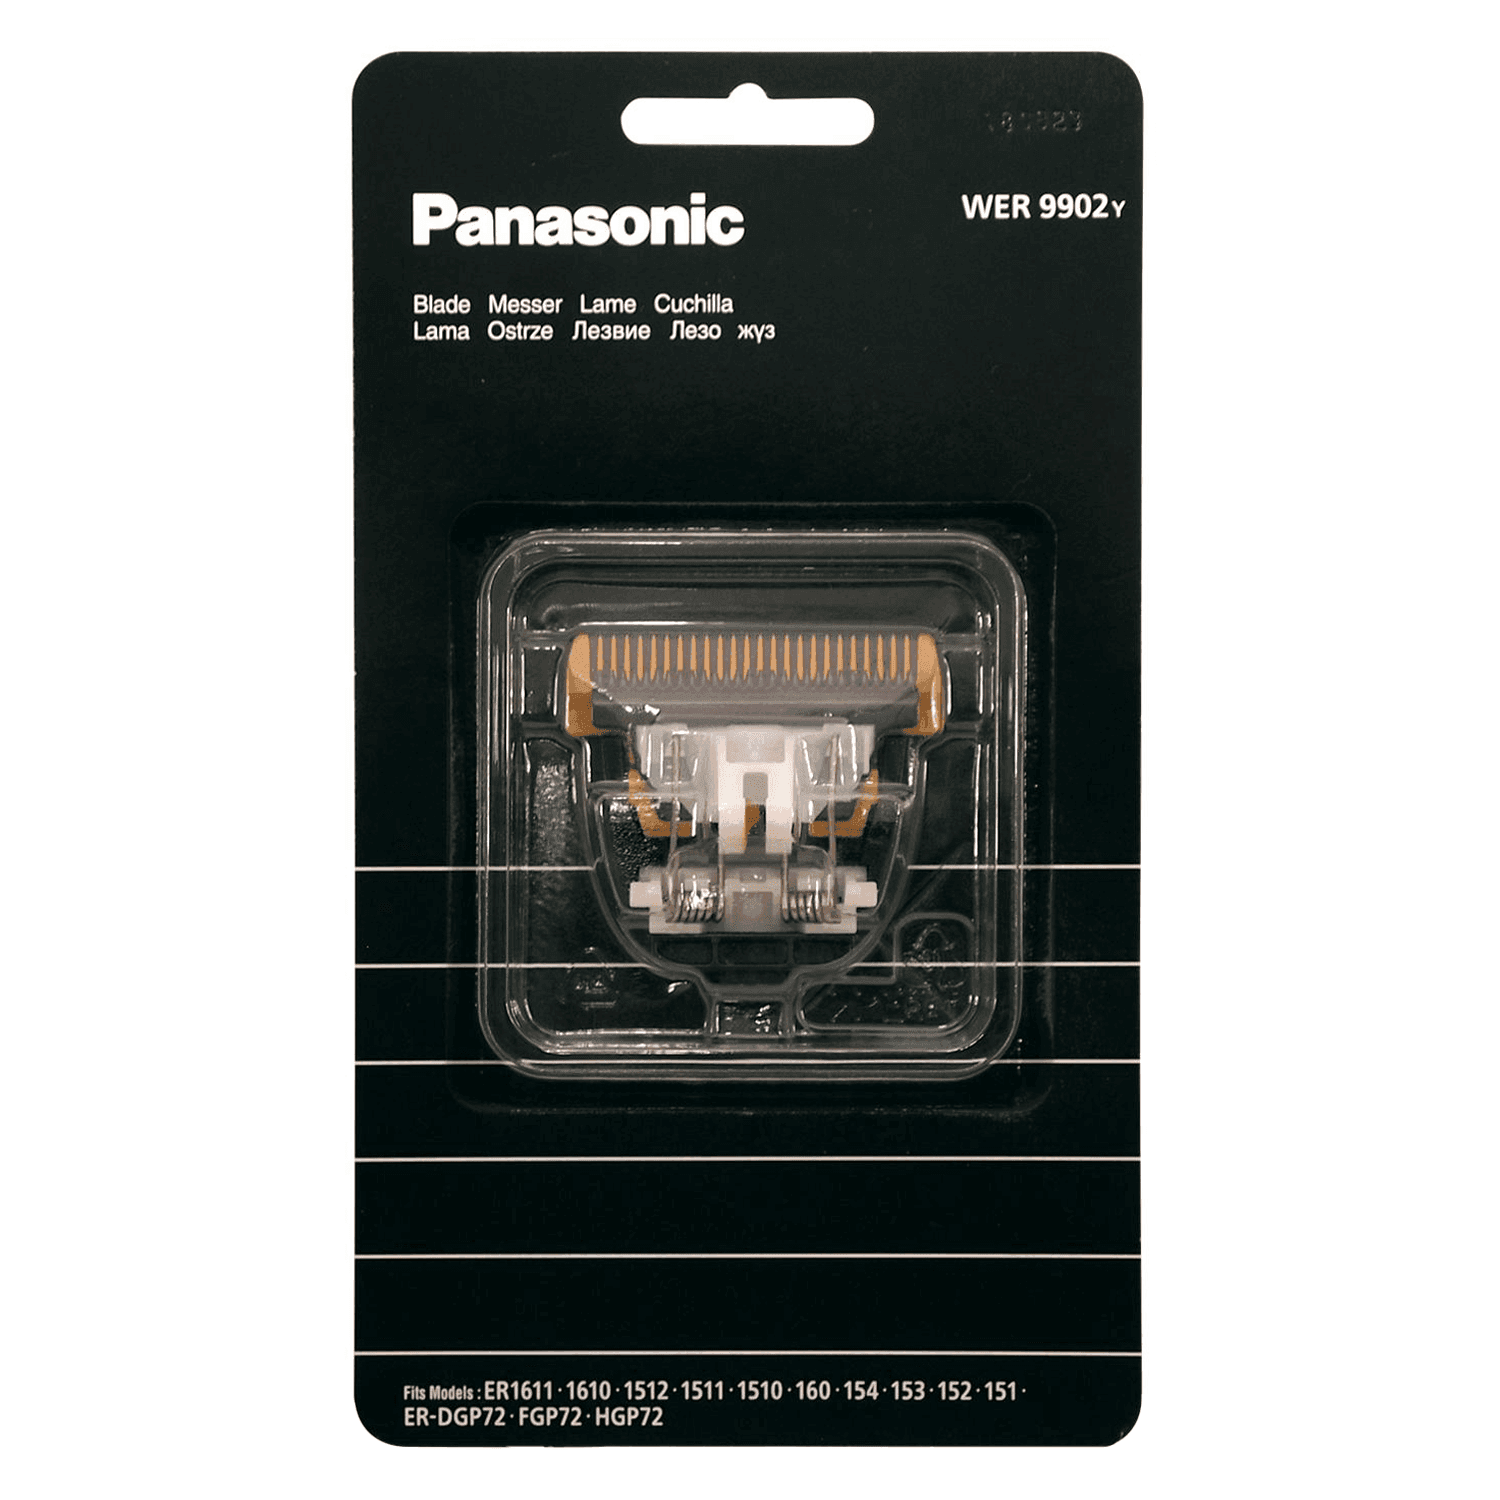 Panasonic - Scherkopf ER-1611 / ER-1512 WER 9902Y